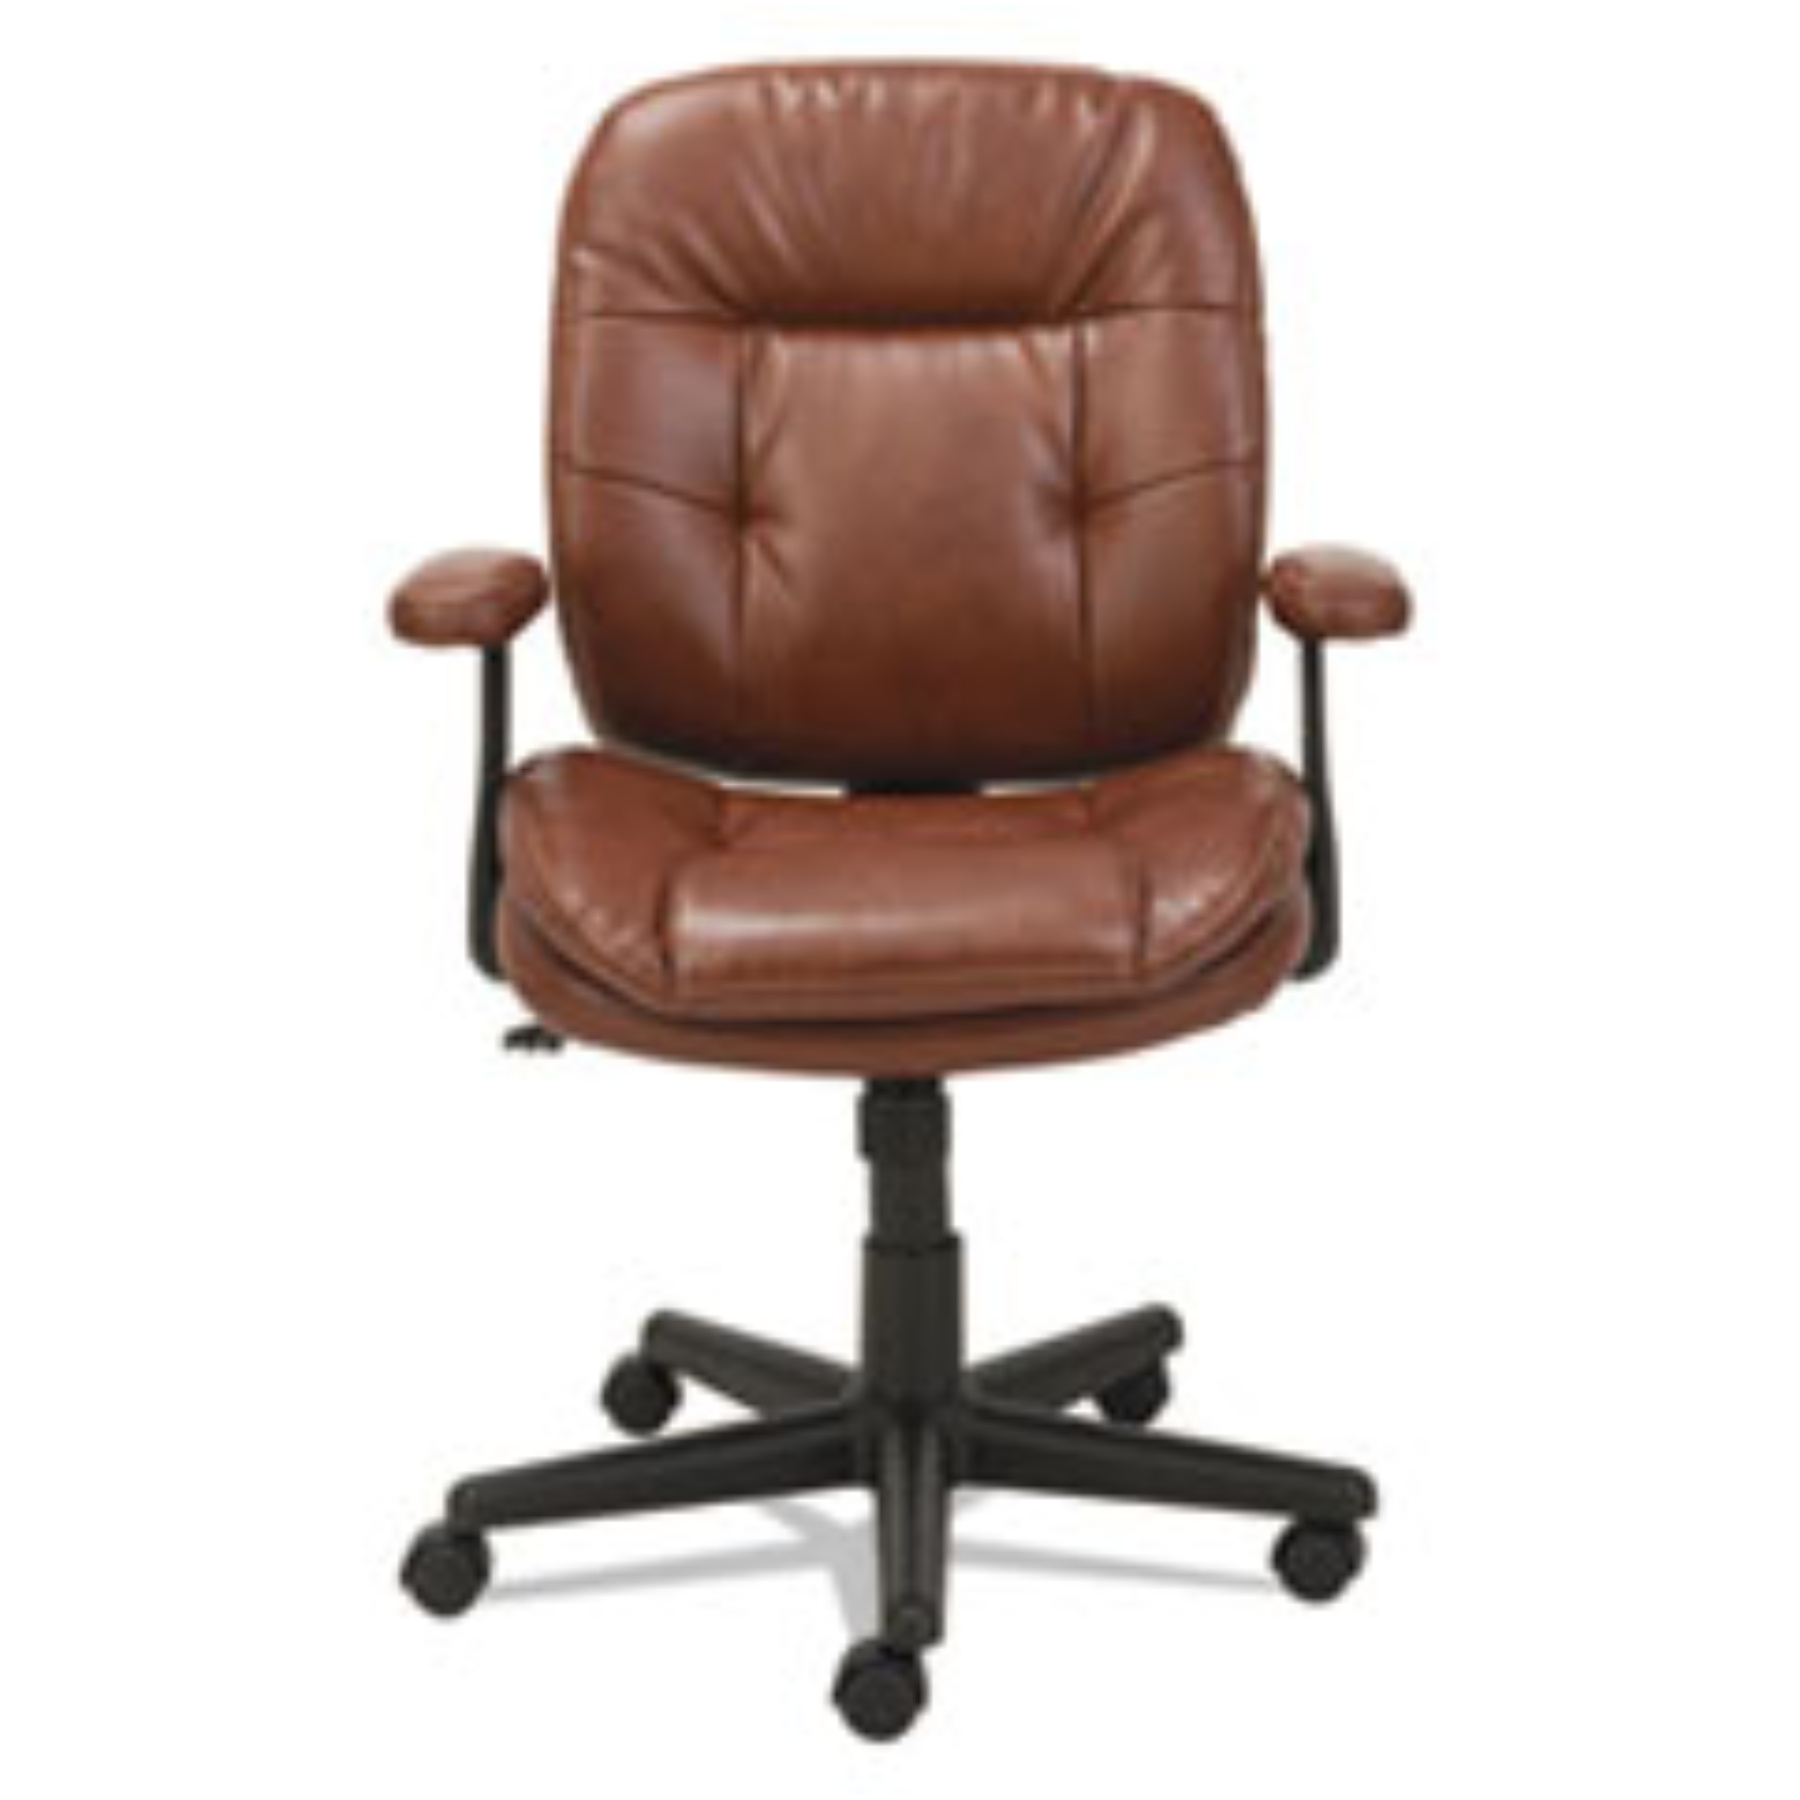 Swivel/Tilt Leather Task Chair, Fixed T-Bar Arms, Chestnut Brown